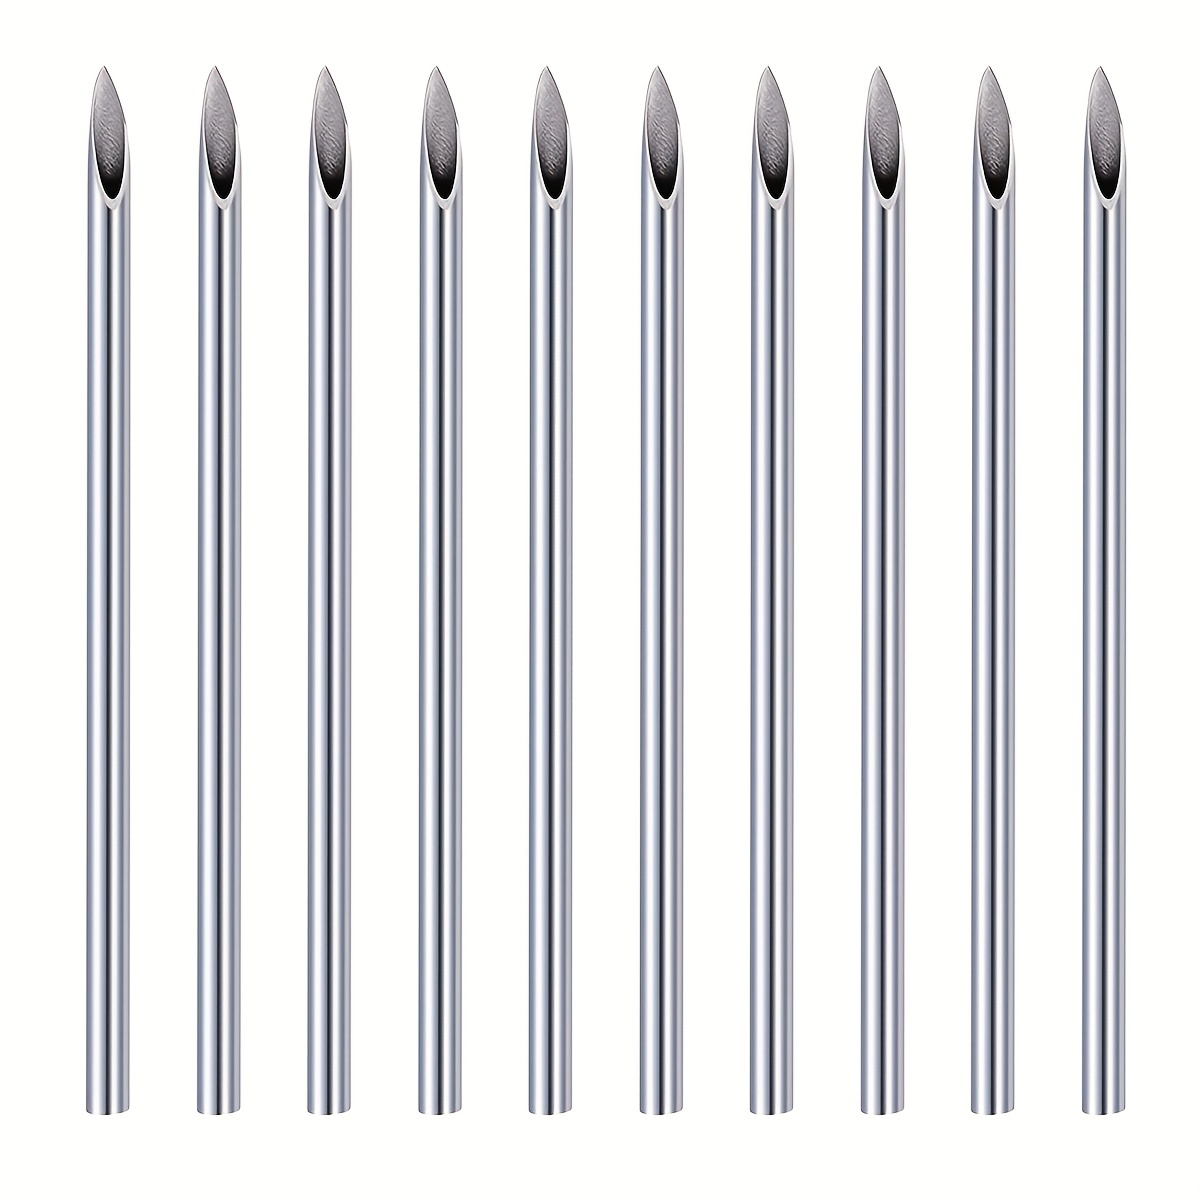 40pcs Mixed Body Piercing Needles, 14g 16g 18g 20g Stainless Steel